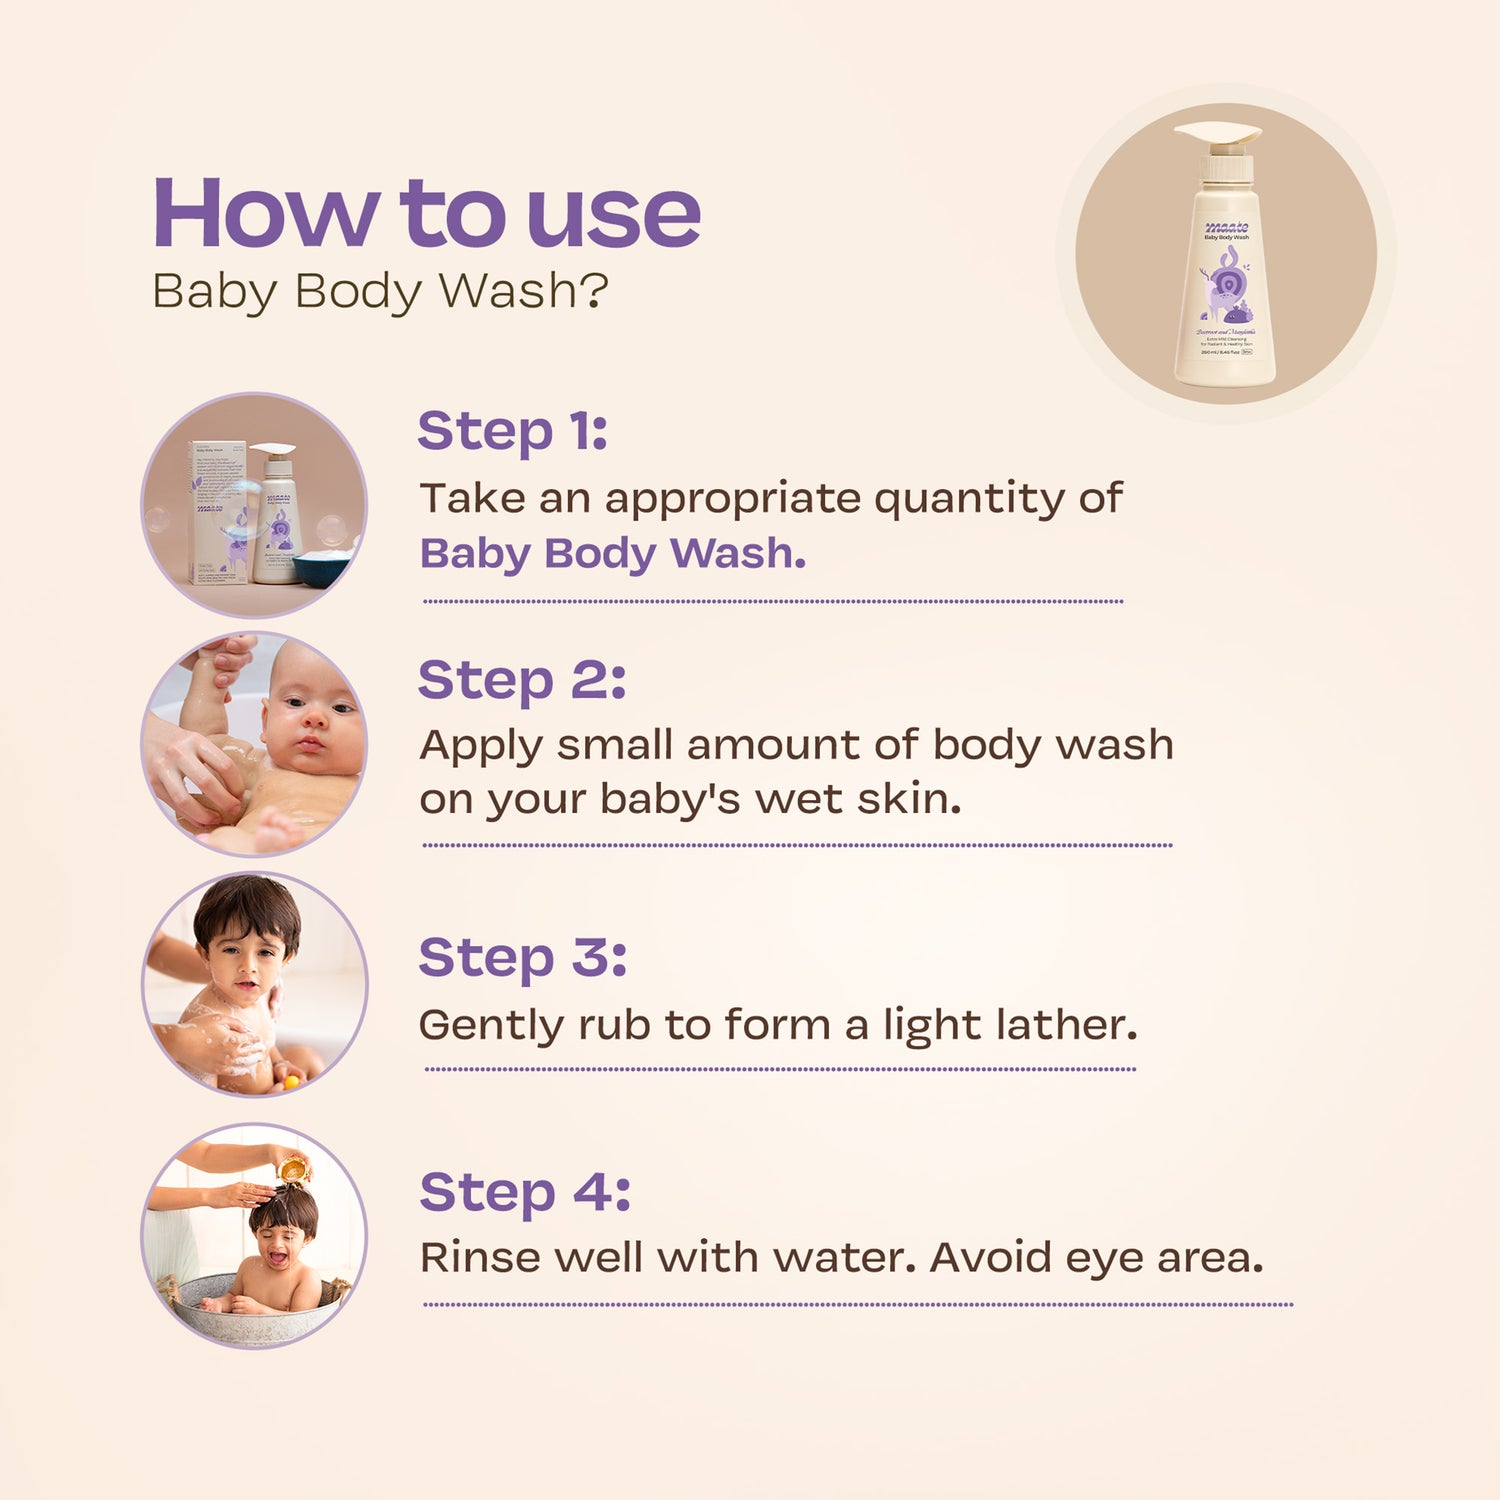 Baby Body Wash ph Balanced | Soap Free - 250 ML